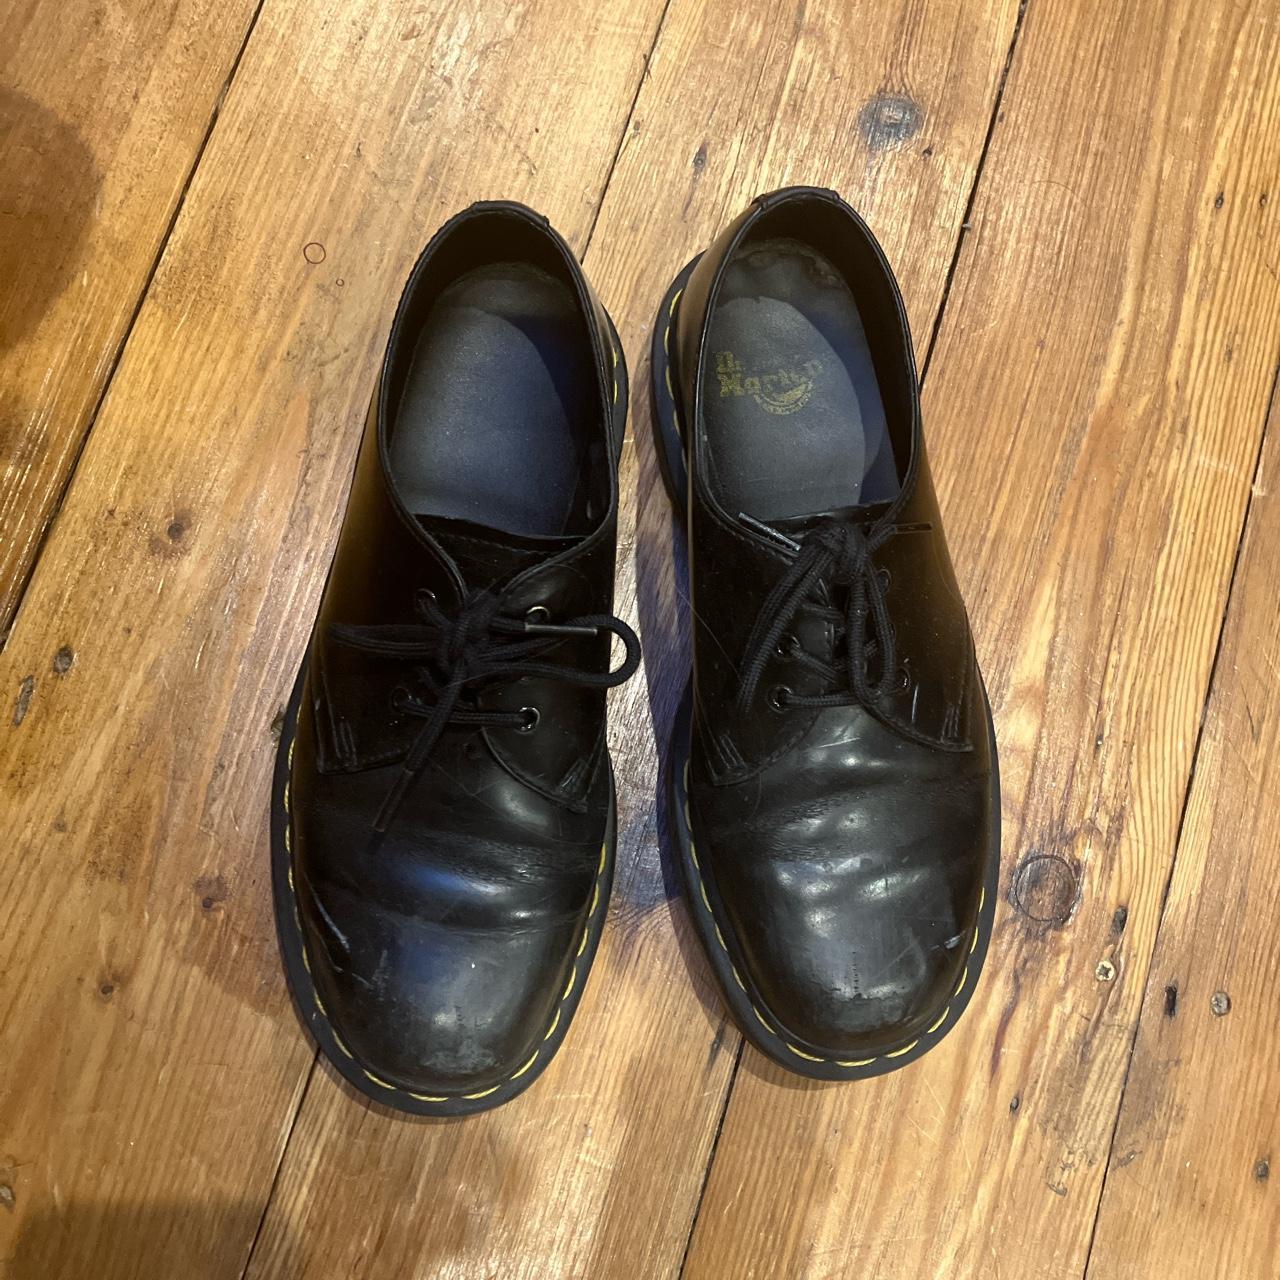 Doc marten shoes womens size 6 - Depop